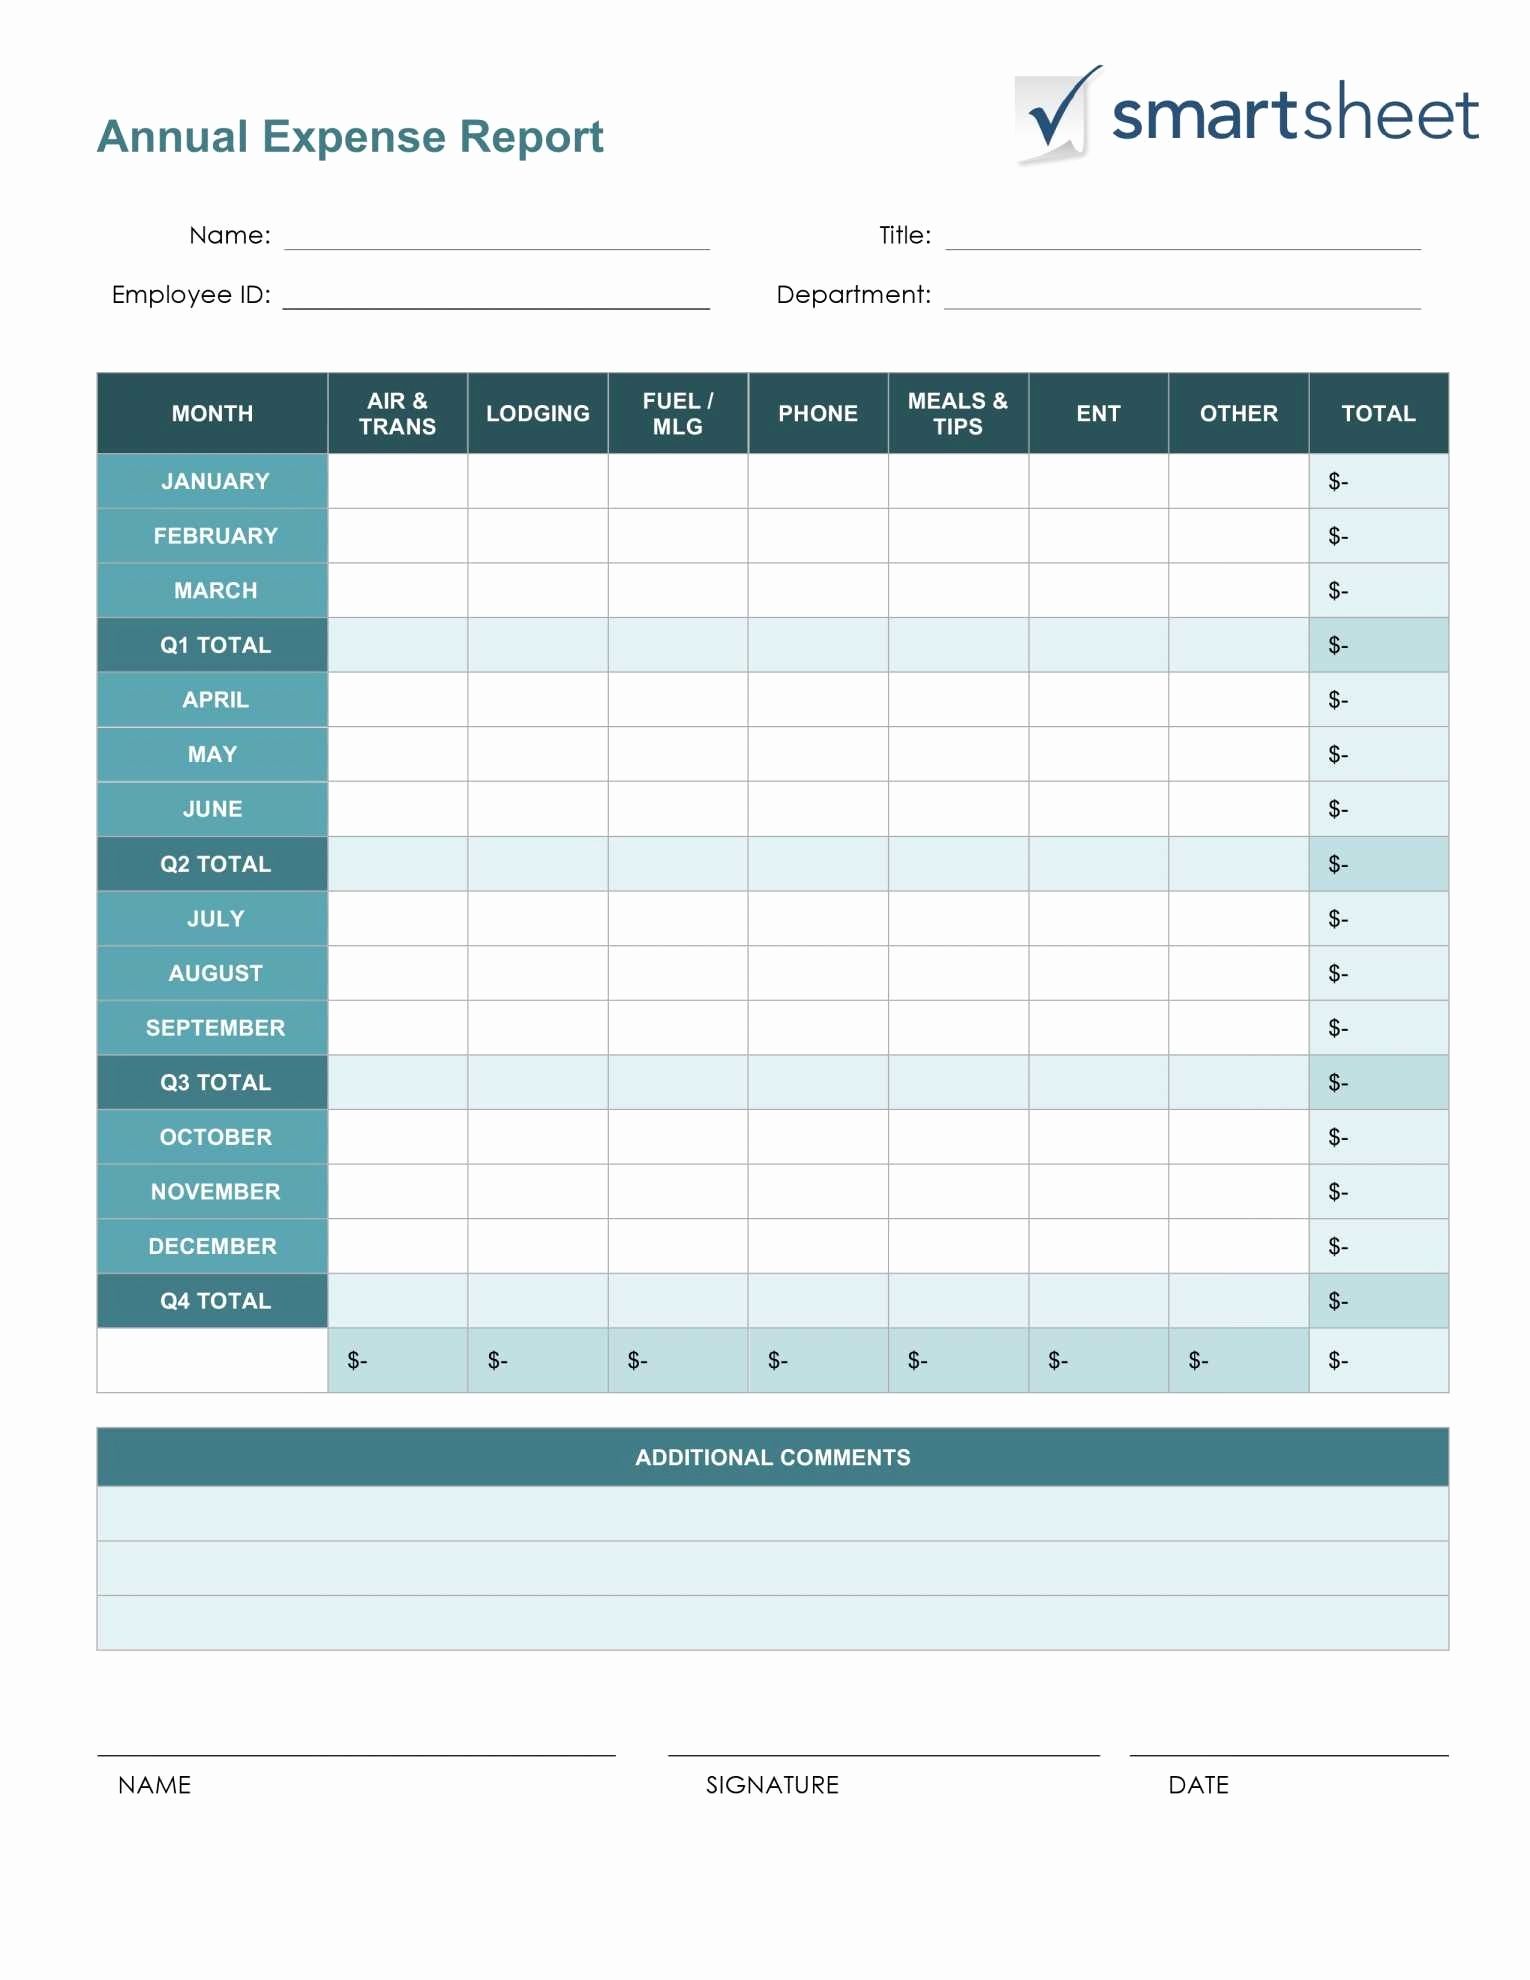 Sample of Financial Inventory Worksheet Excel inside Financial Inventory Worksheet Excel in Spreadsheet